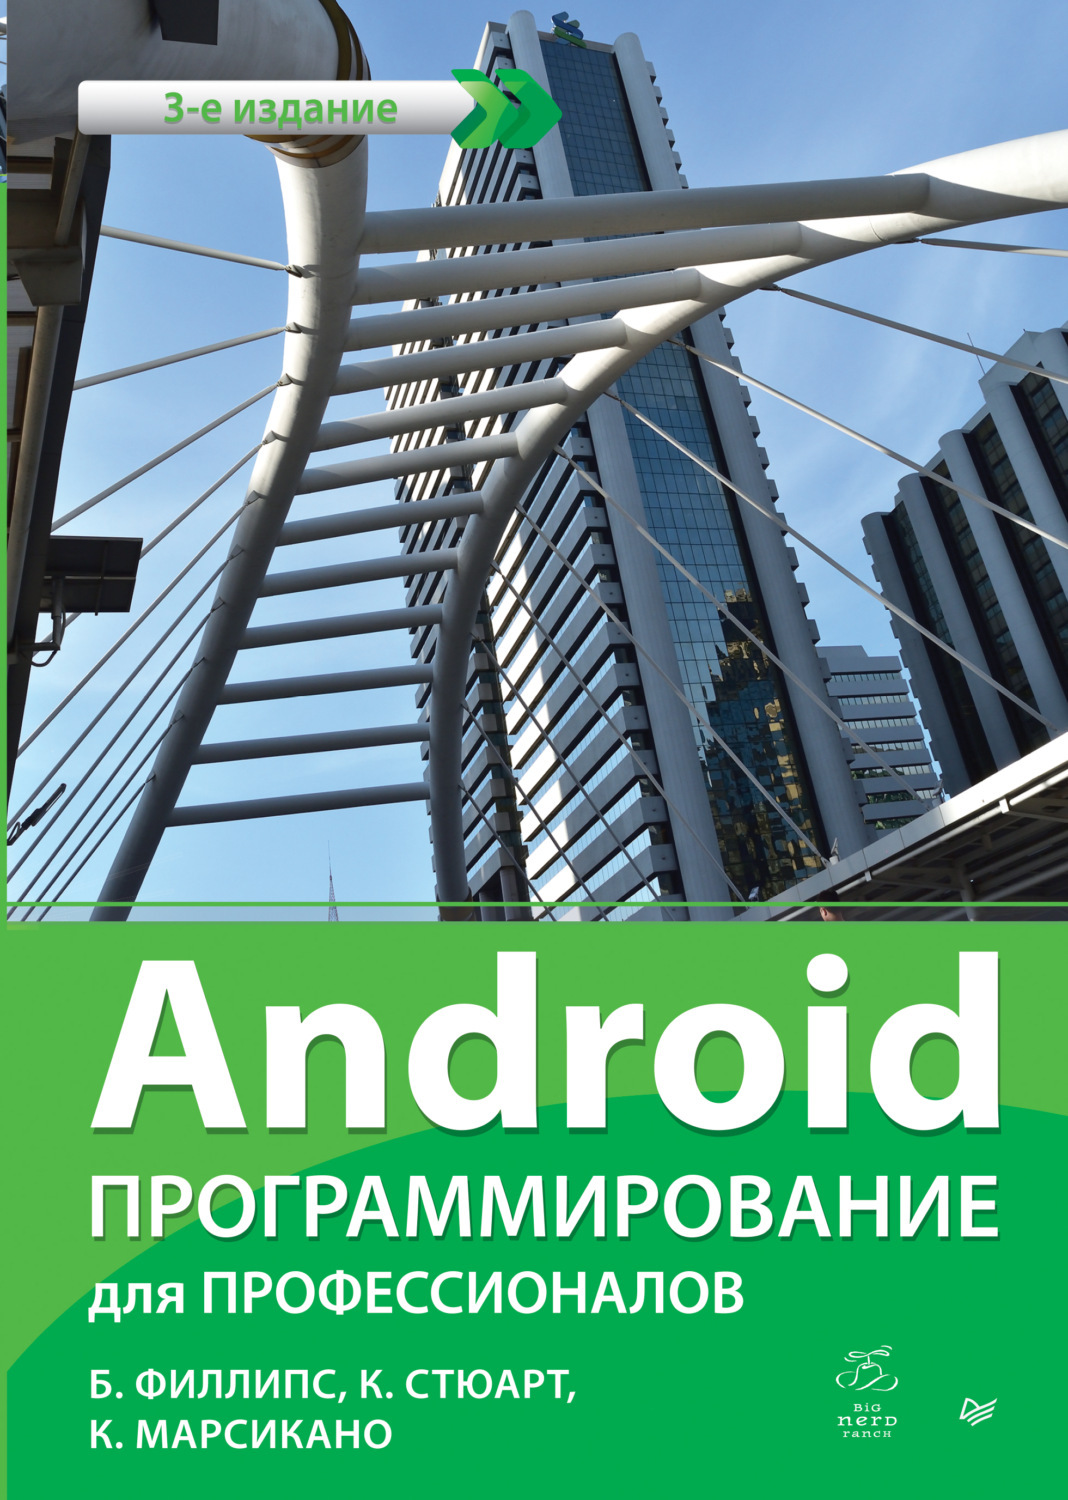 Android programmes. Android. Программирование для профессионалов. Андроид программирование для профессионалов книга. Андроид для профессионалов. Android программирование для профессионалов 4-е издание.